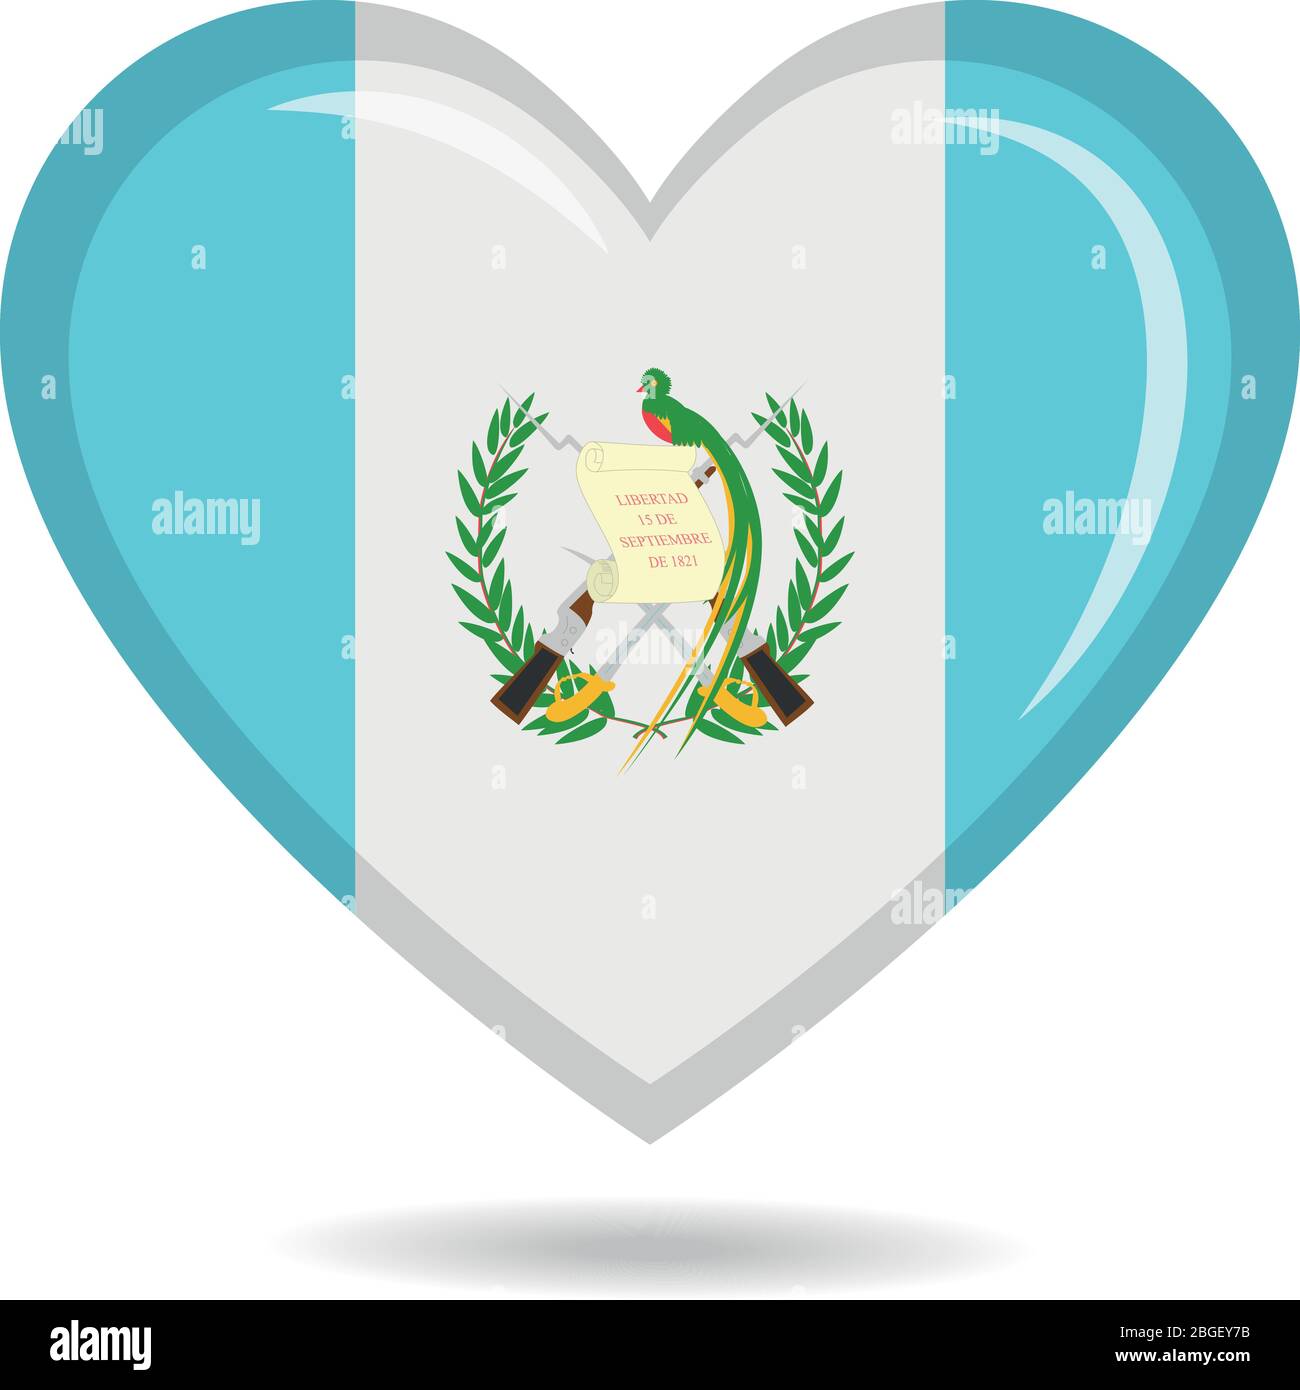 Guatemala national flag in heart shape vector illustration Stock Vector